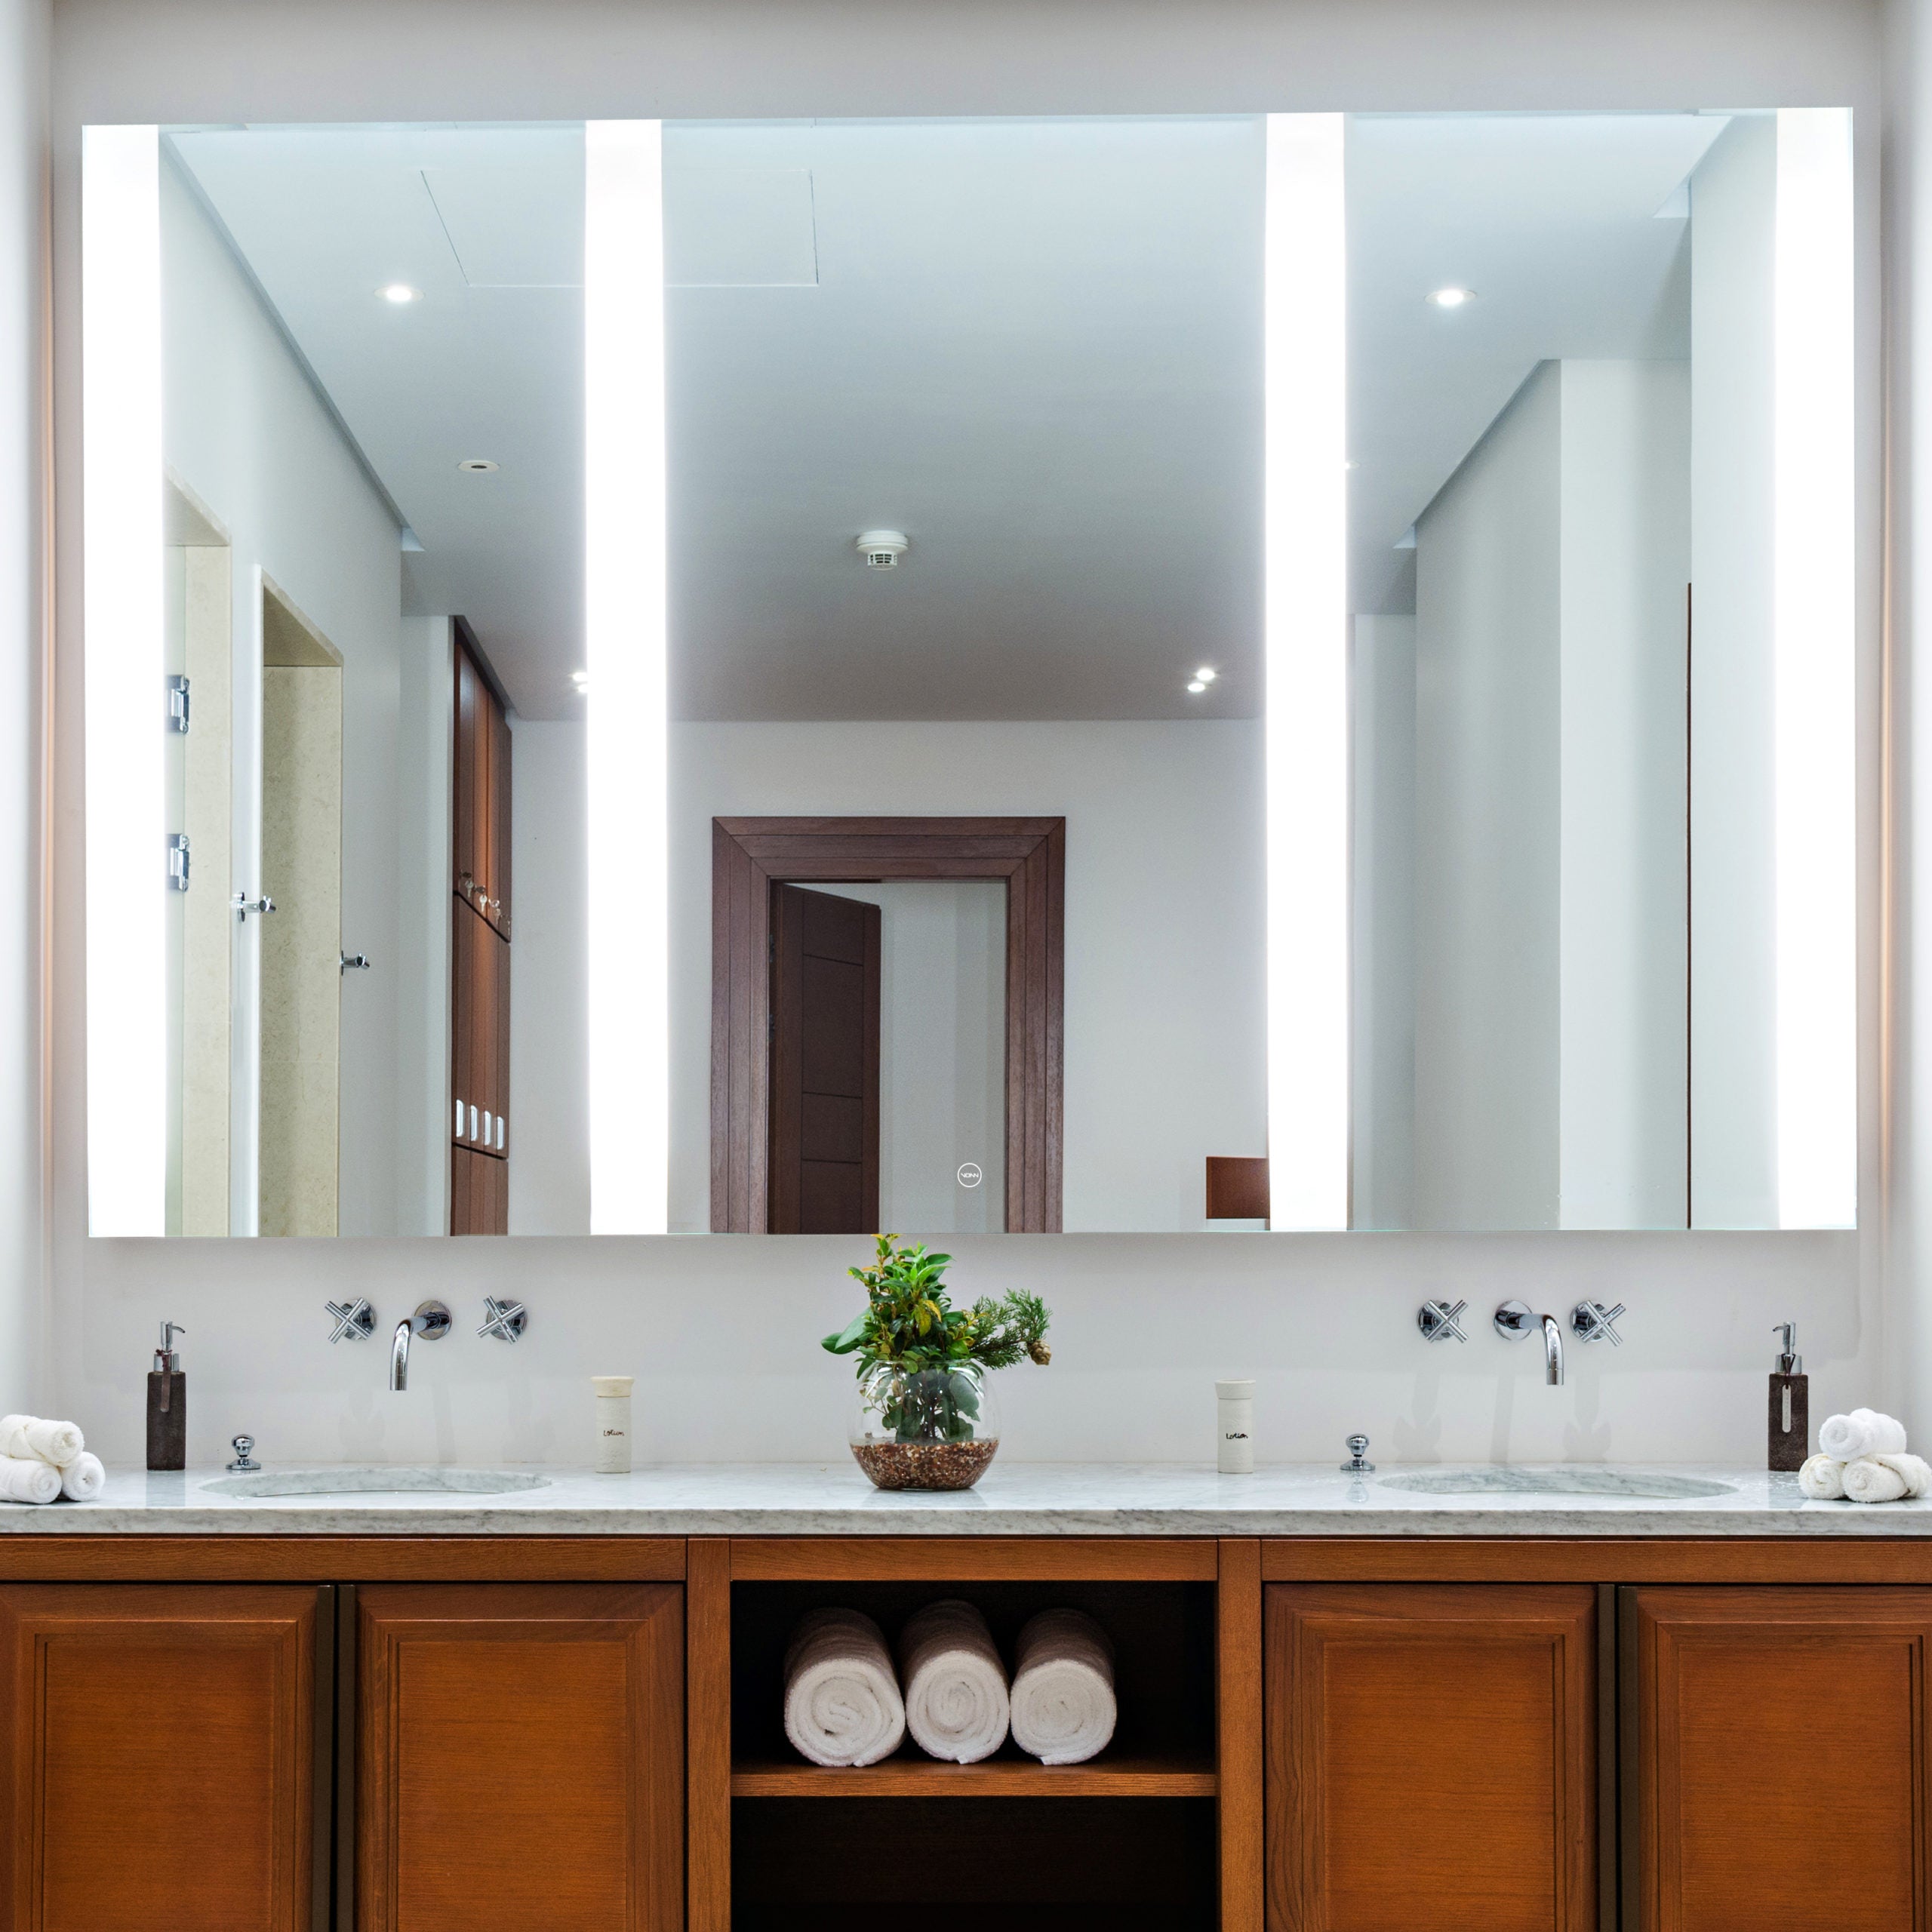 How do I choose a lighted bathroom mirror? – LEDMyPlace